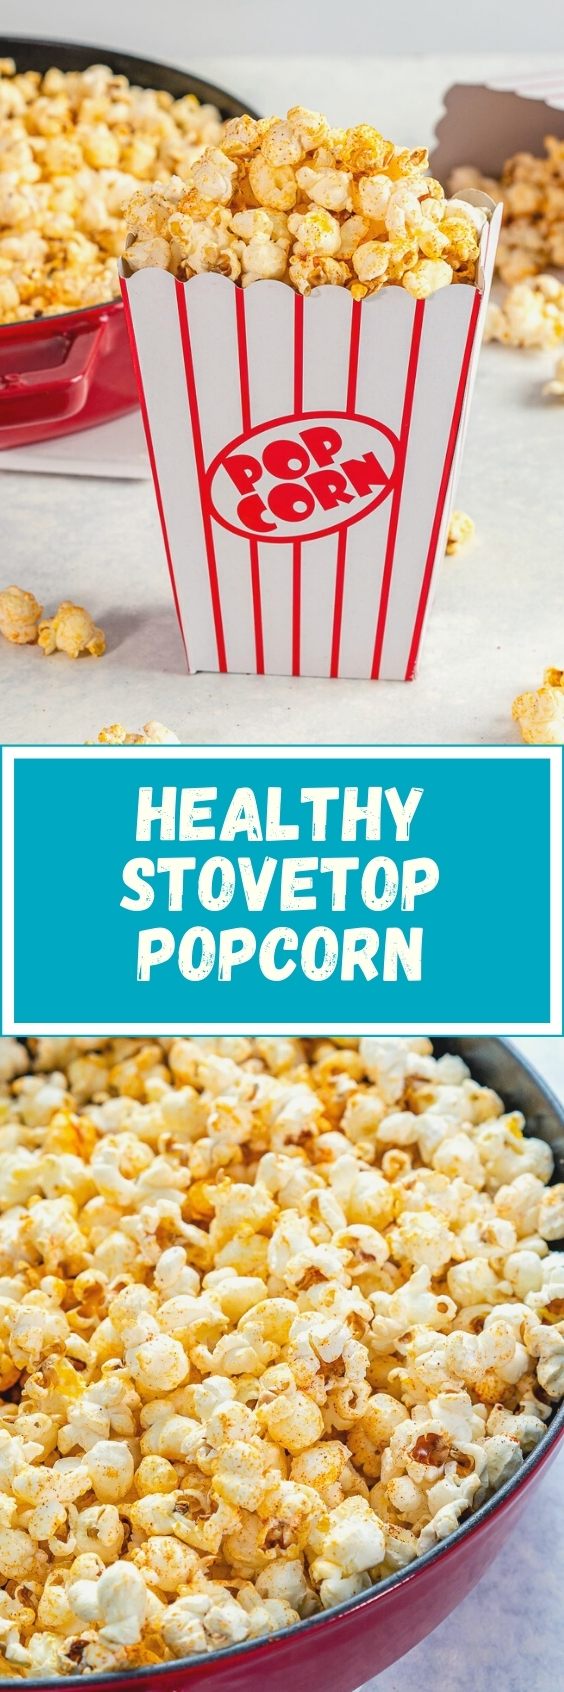 https://cleanfoodcrush.com/wp-content/uploads/2020/12/Healthier-Stovetop-Popcorn-Recipe-CleanFoodCrush.jpg